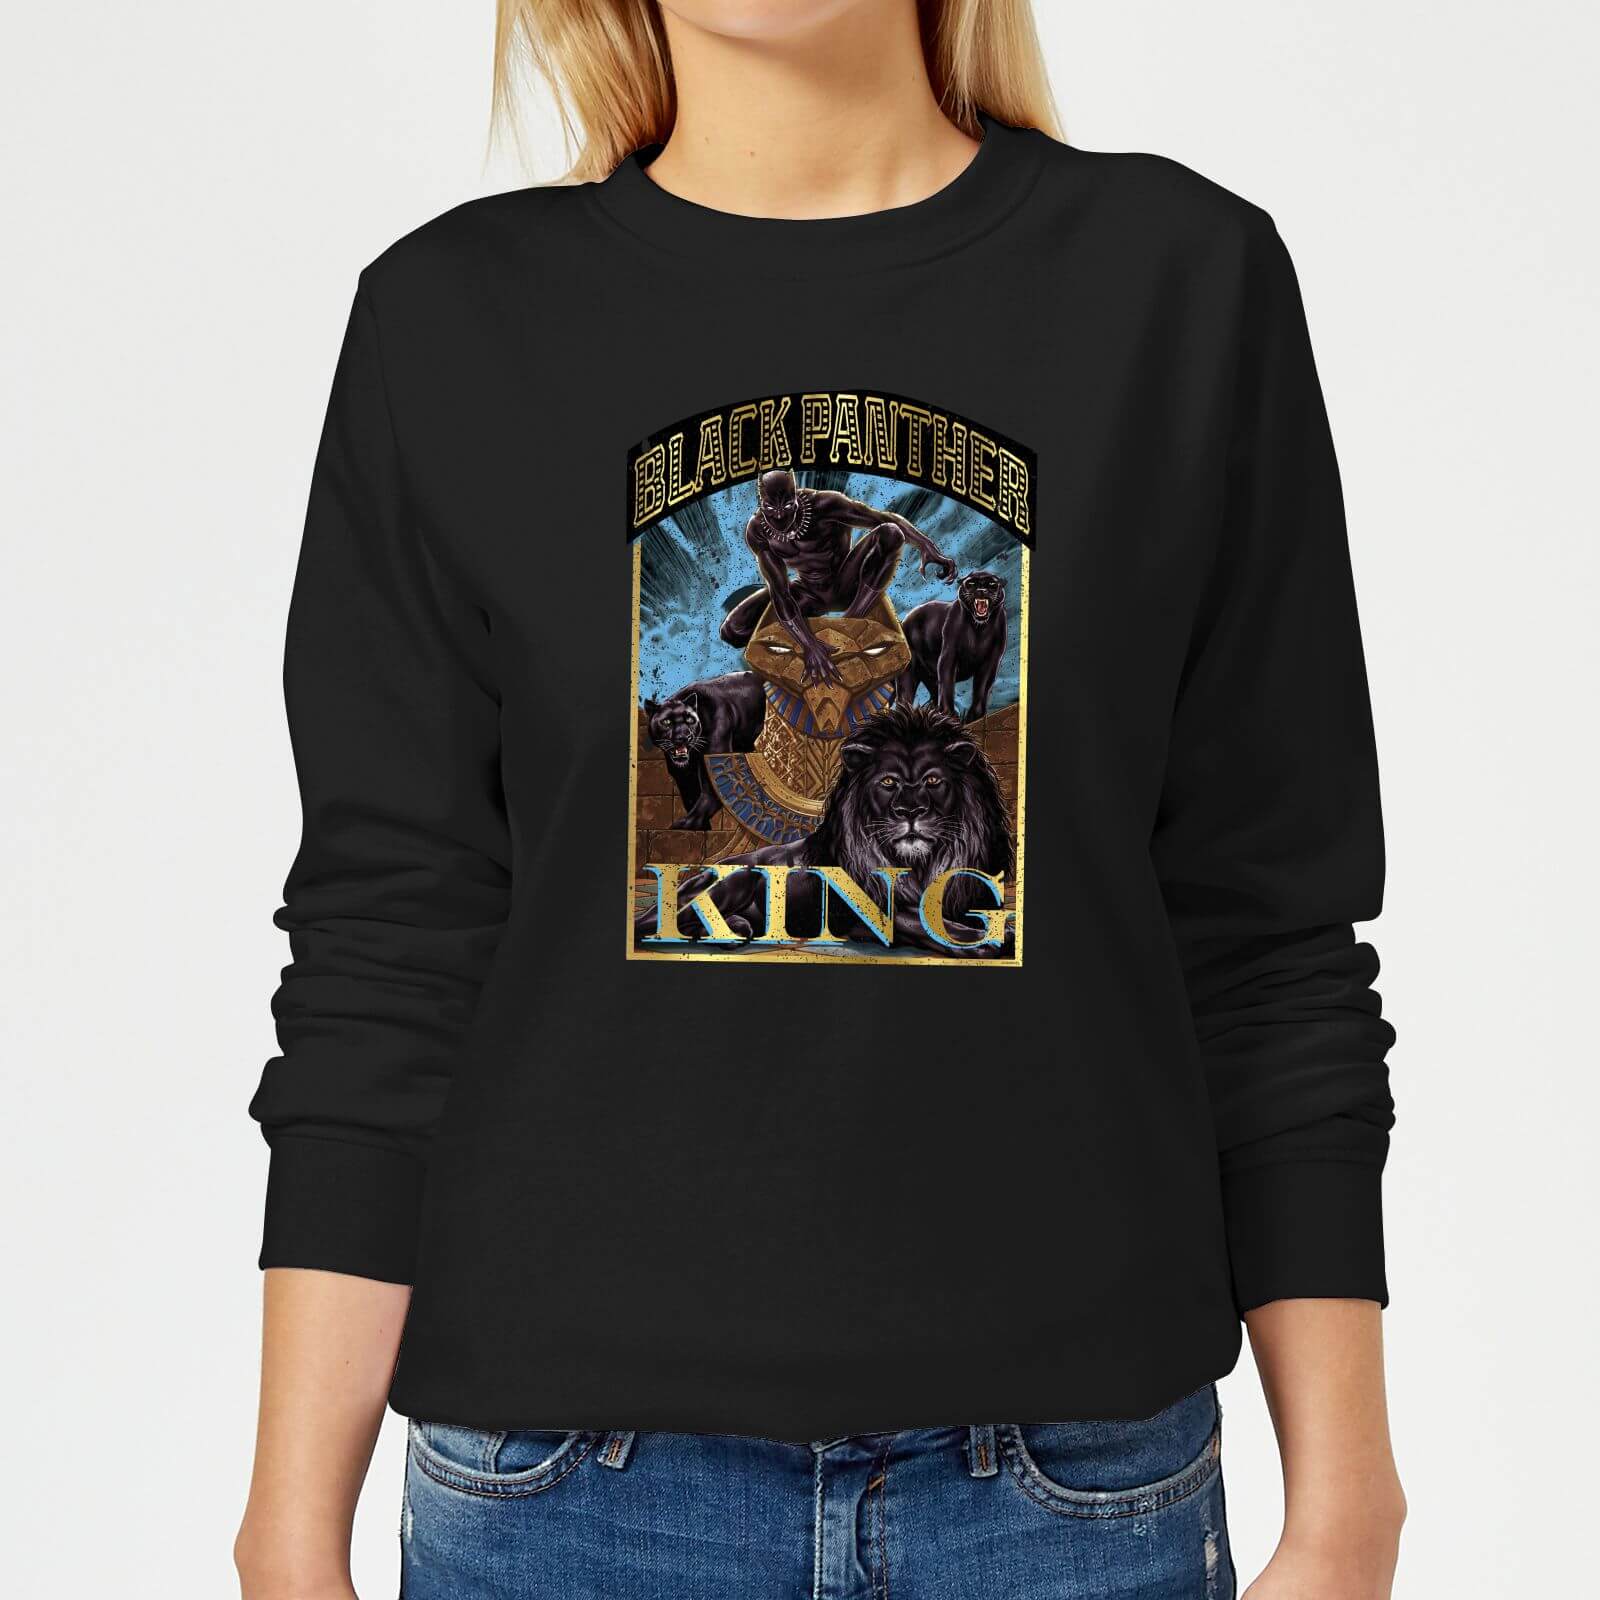 Marvel Black Panther Homage Women's Sweatshirt - Black - S - Black